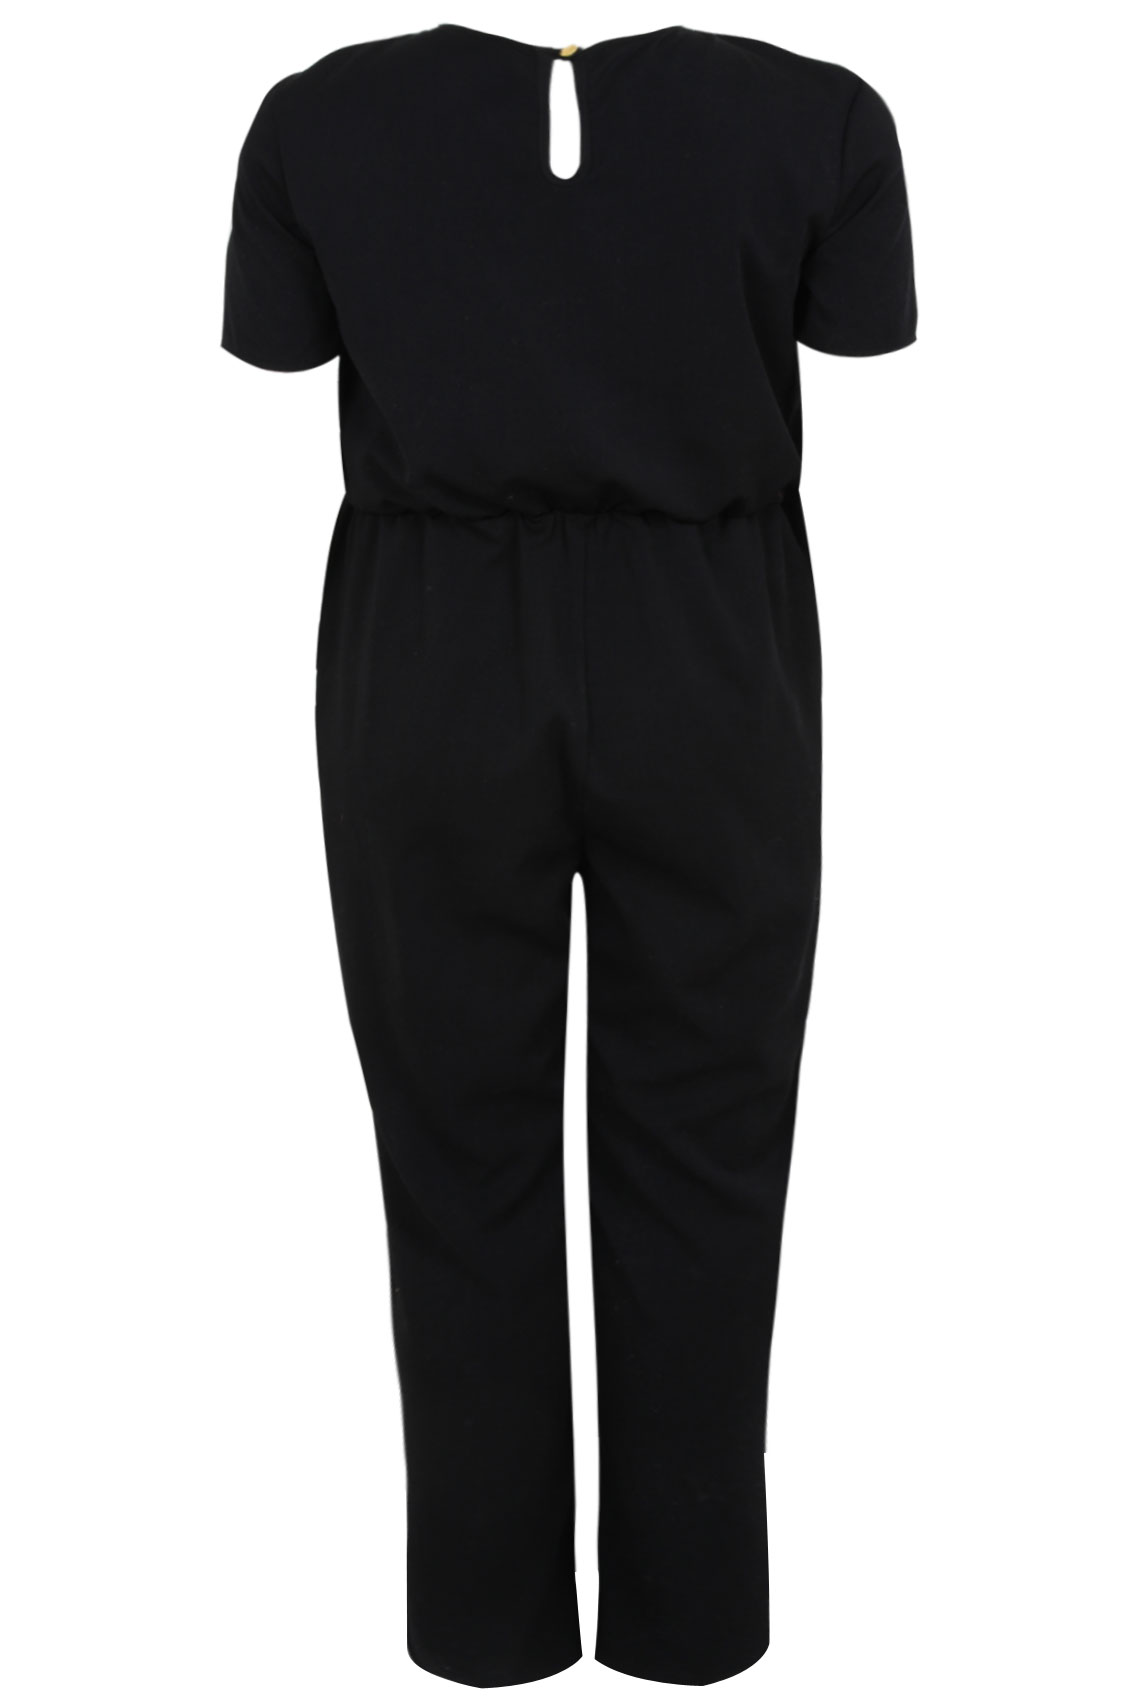 Black Full Length Jumpsuit With Zip & Cut Out Detail Plus Sizes 14,16 ...